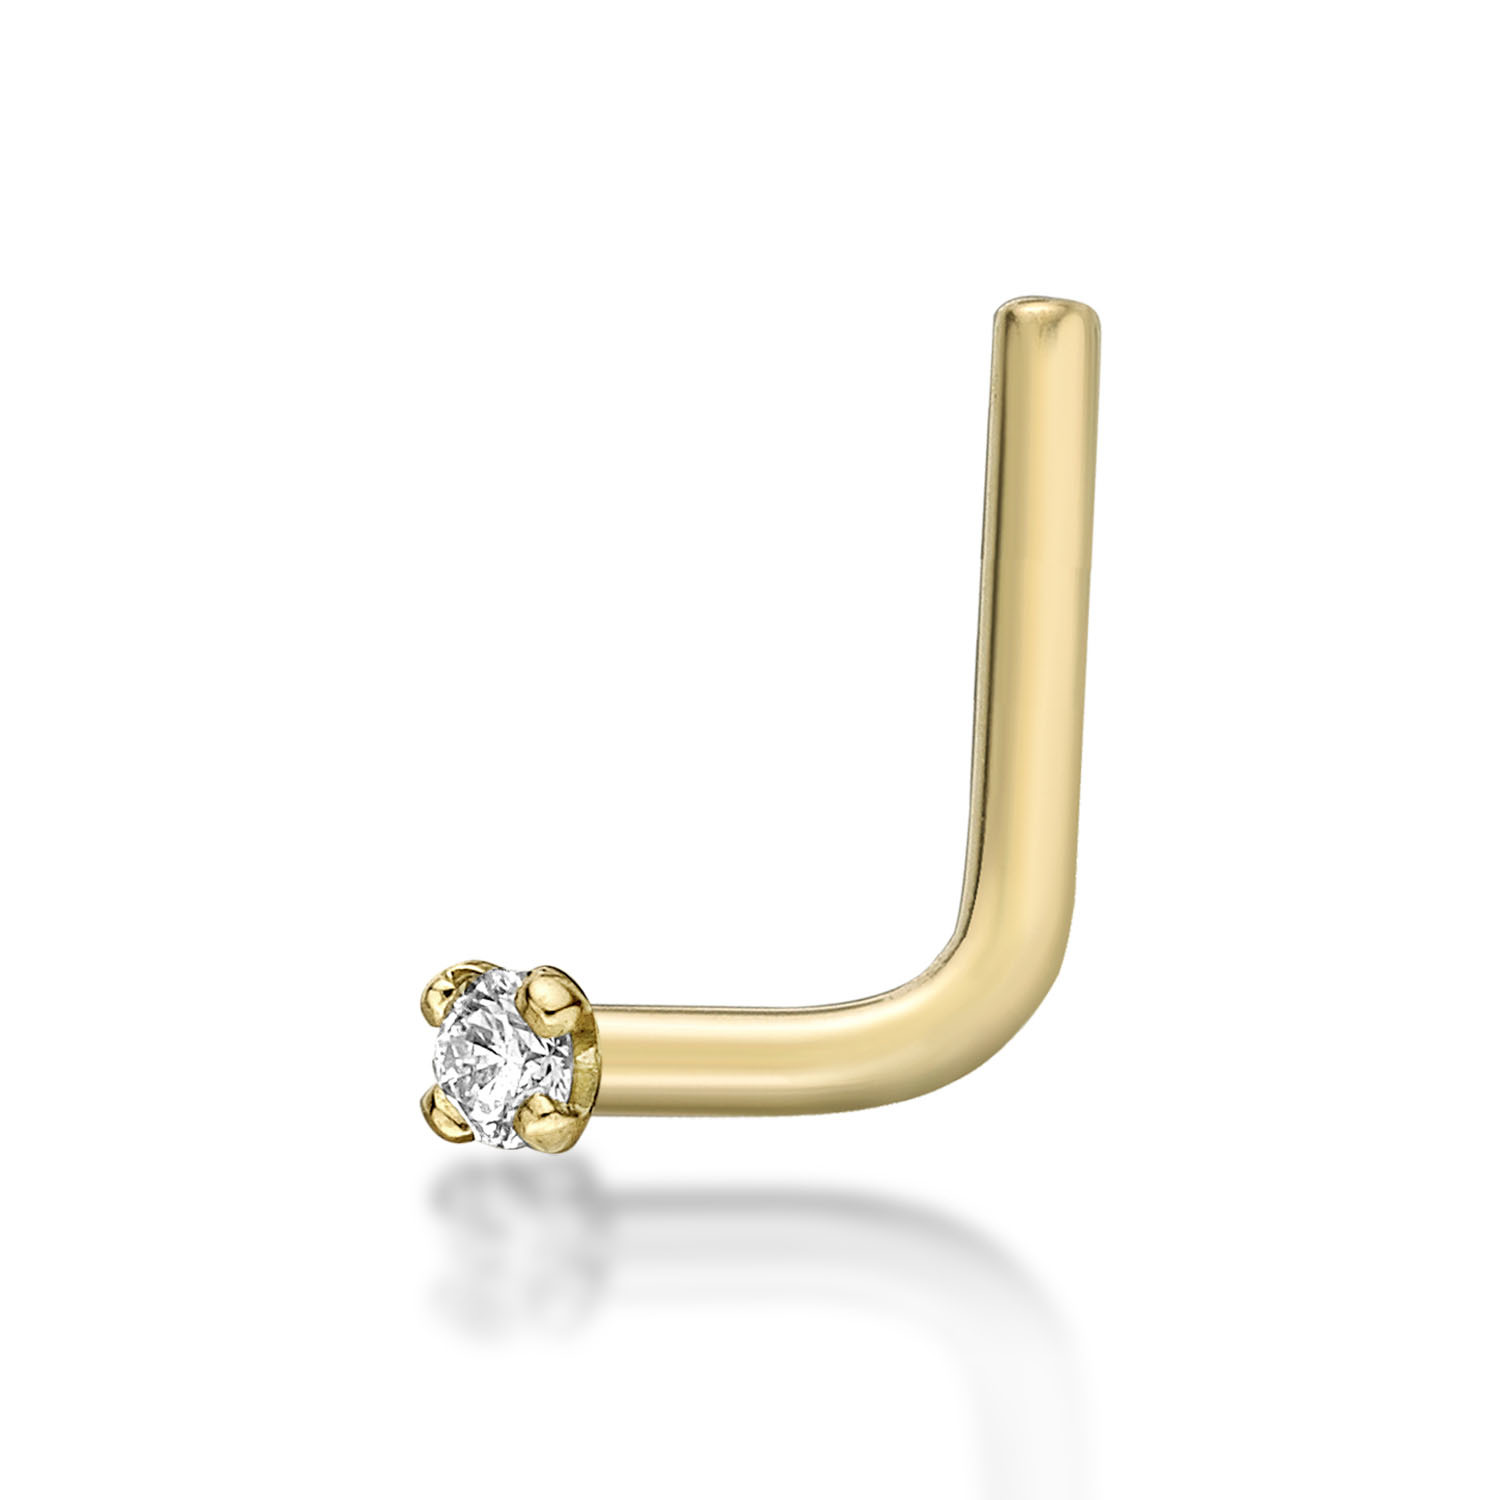 Lavari Jewelers Women's White Diamond 14K Yellow Gold L-Shaped Nose Ring, 0.01 Carat, 18 Gauge